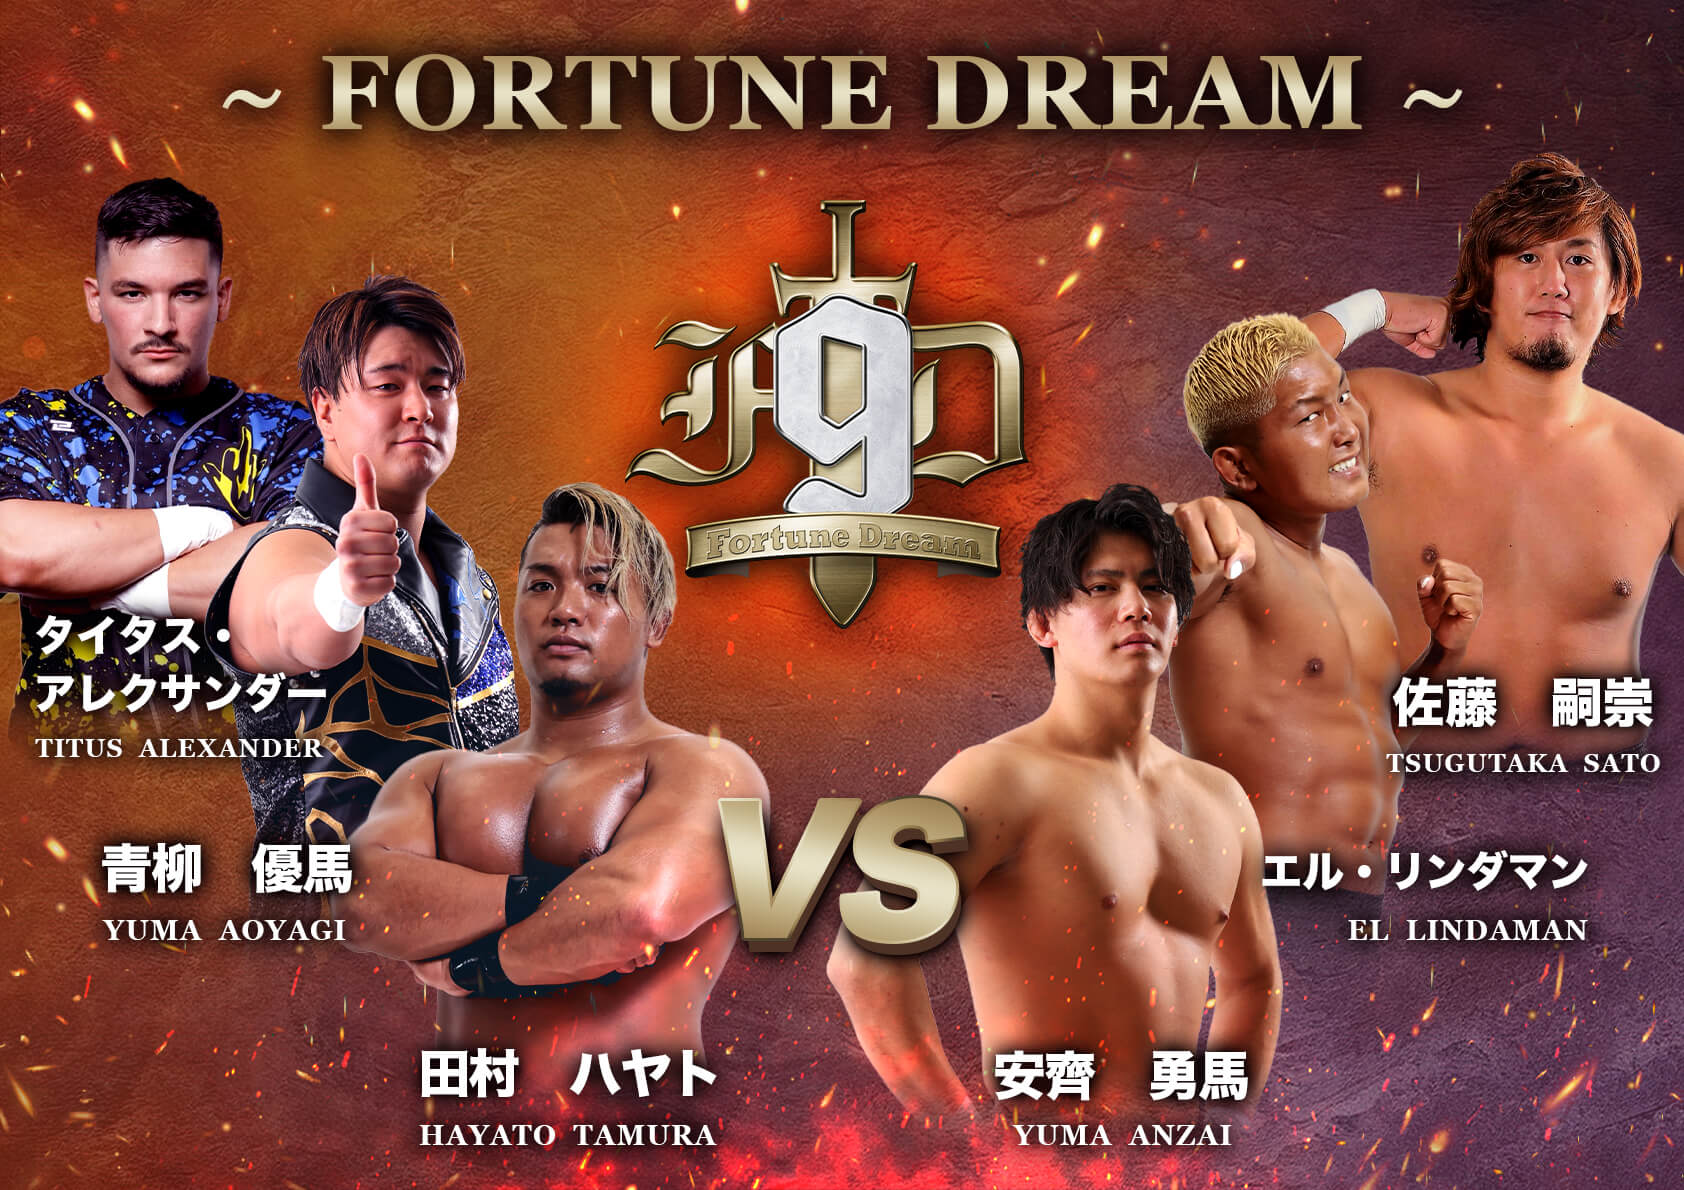 Fortune Dream match: Fortune Dream